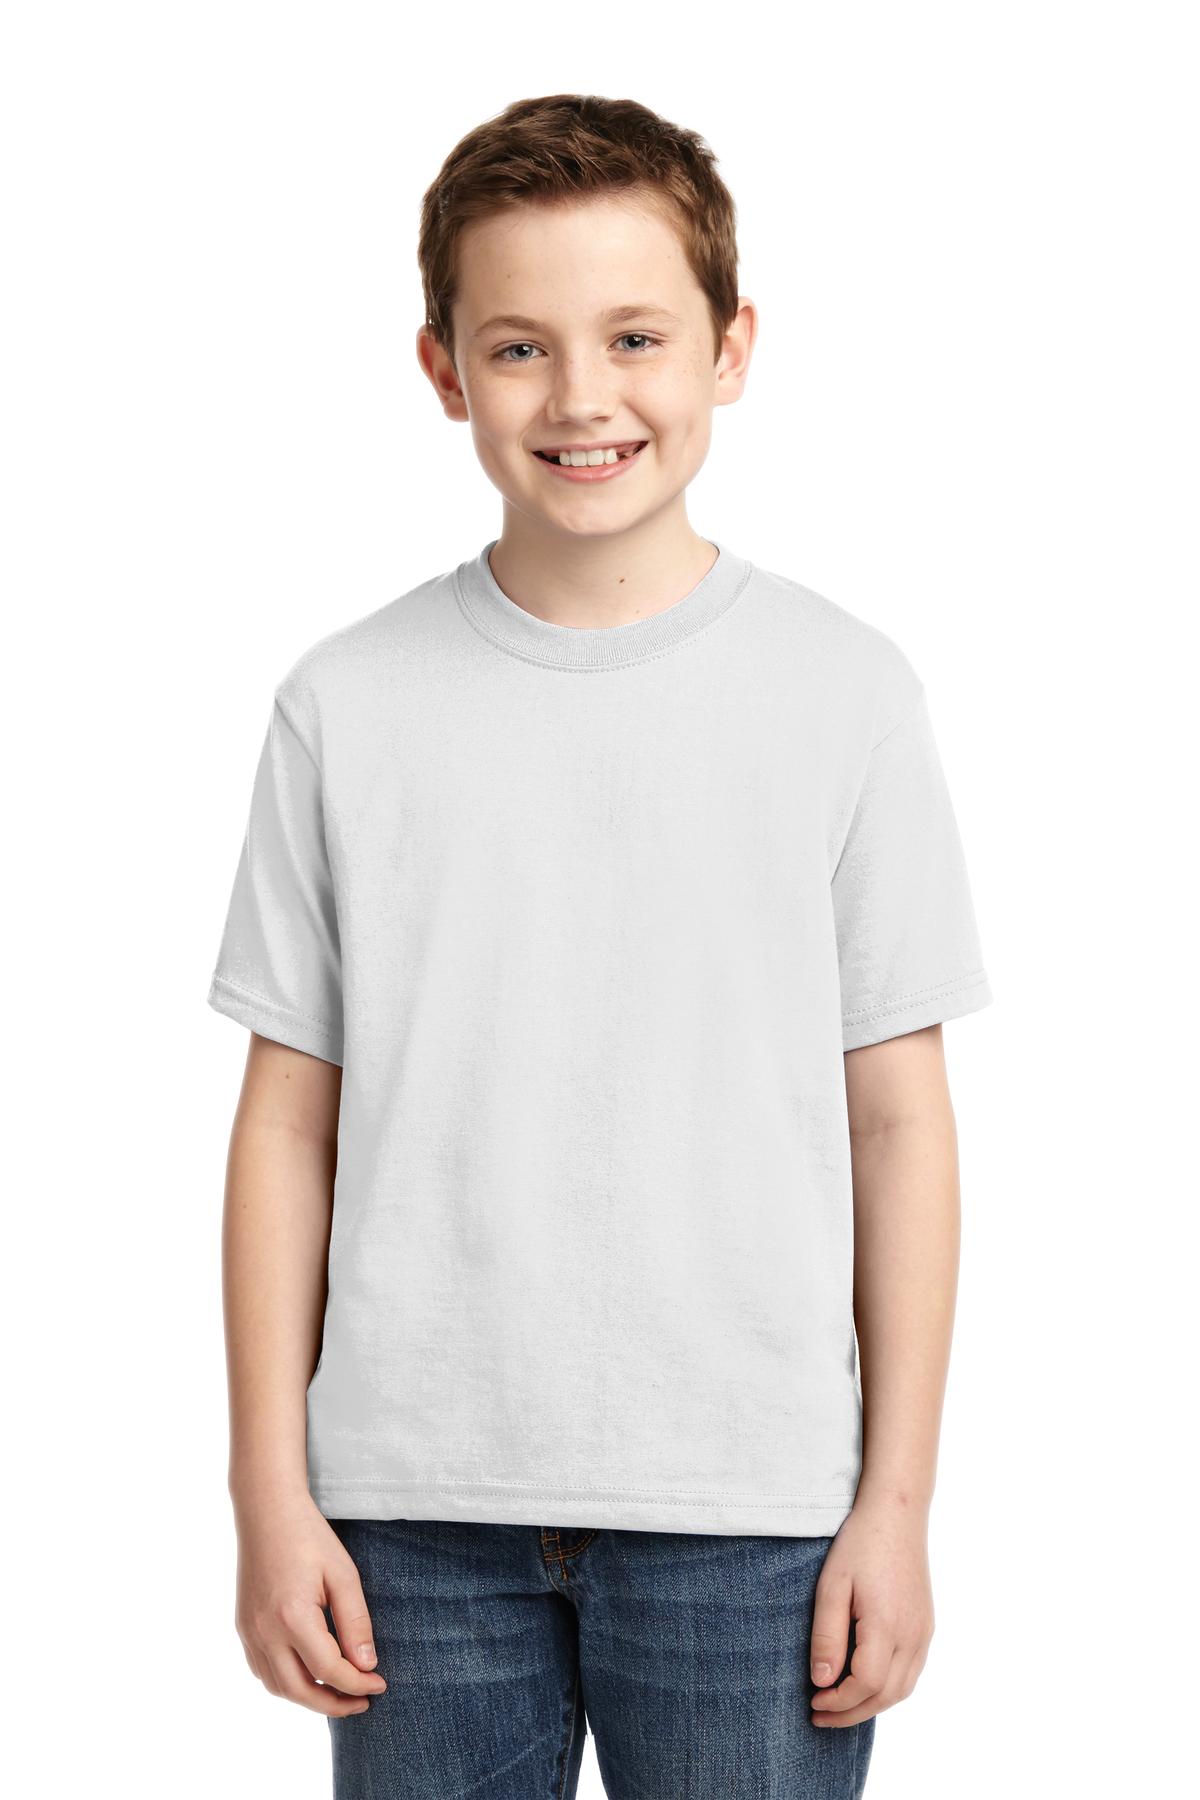 JERZEES® - Youth Dri-Power® 50/50 Cotton/Poly T-Shirt. 29B [White] - DFW Impression